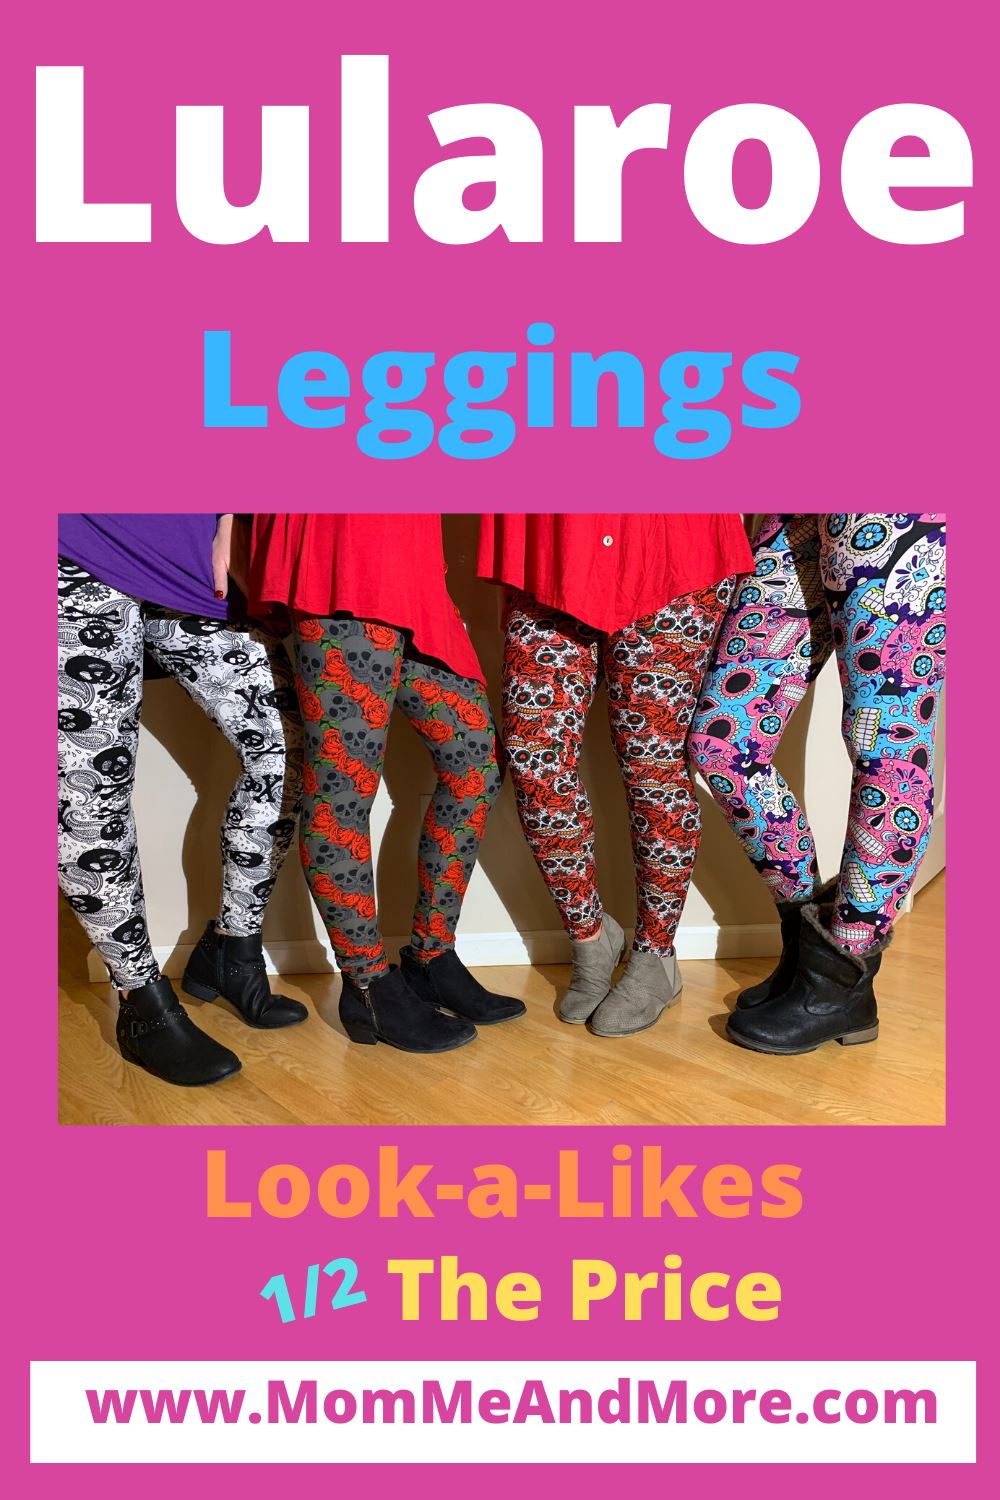  Lularoe Leggings